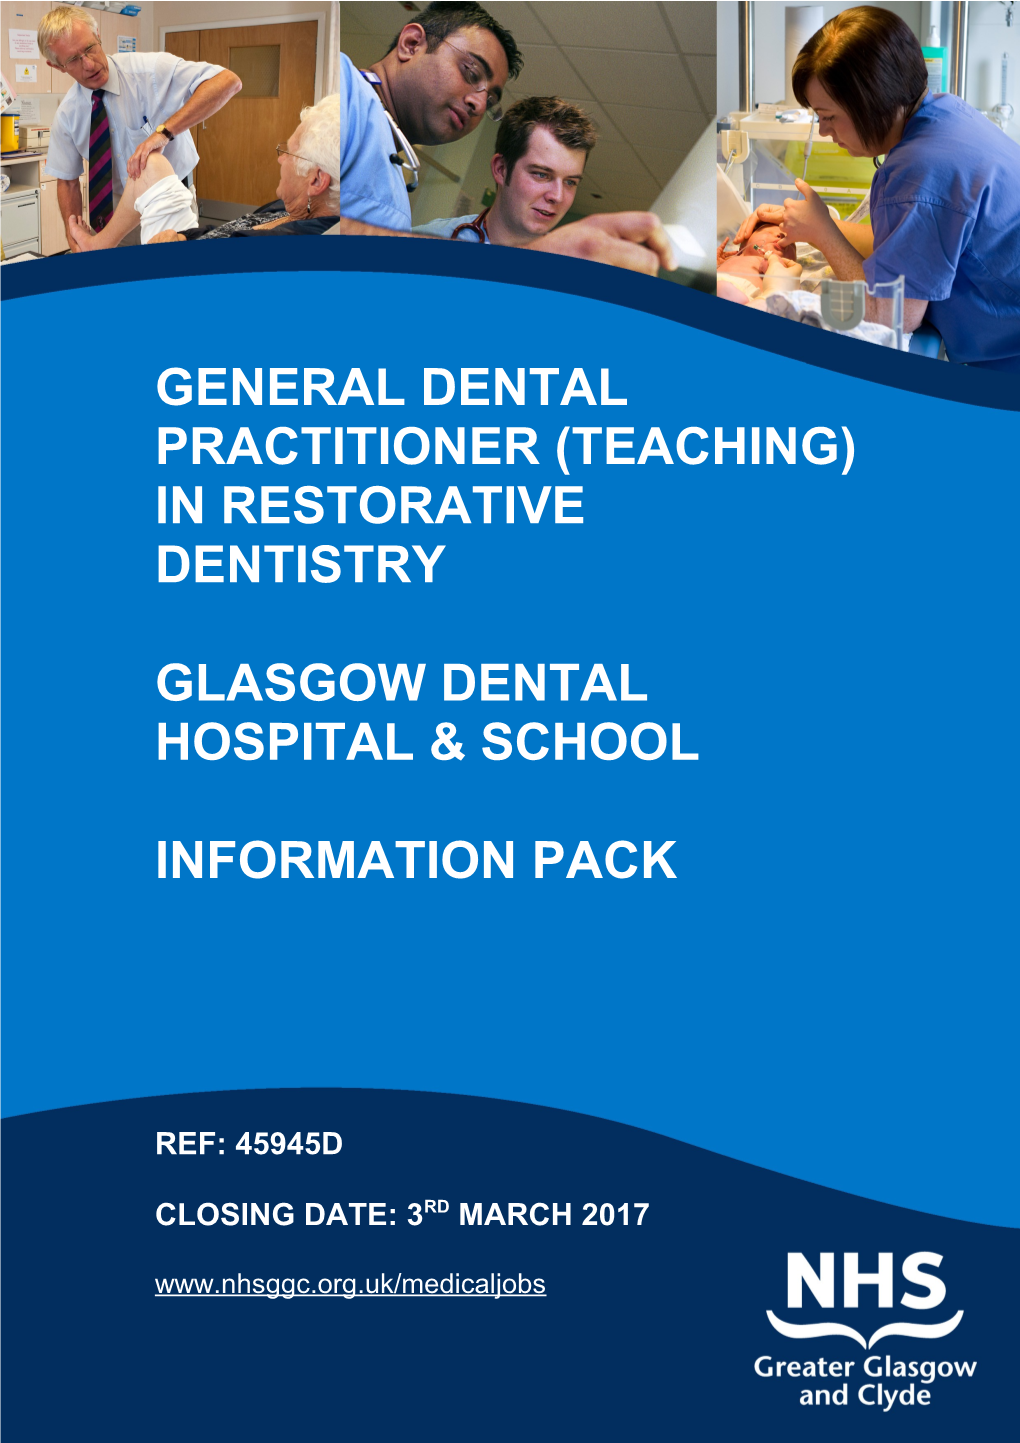 GENERAL DENTAL PRACTITIONER (Teaching) in Restorative Dentistry